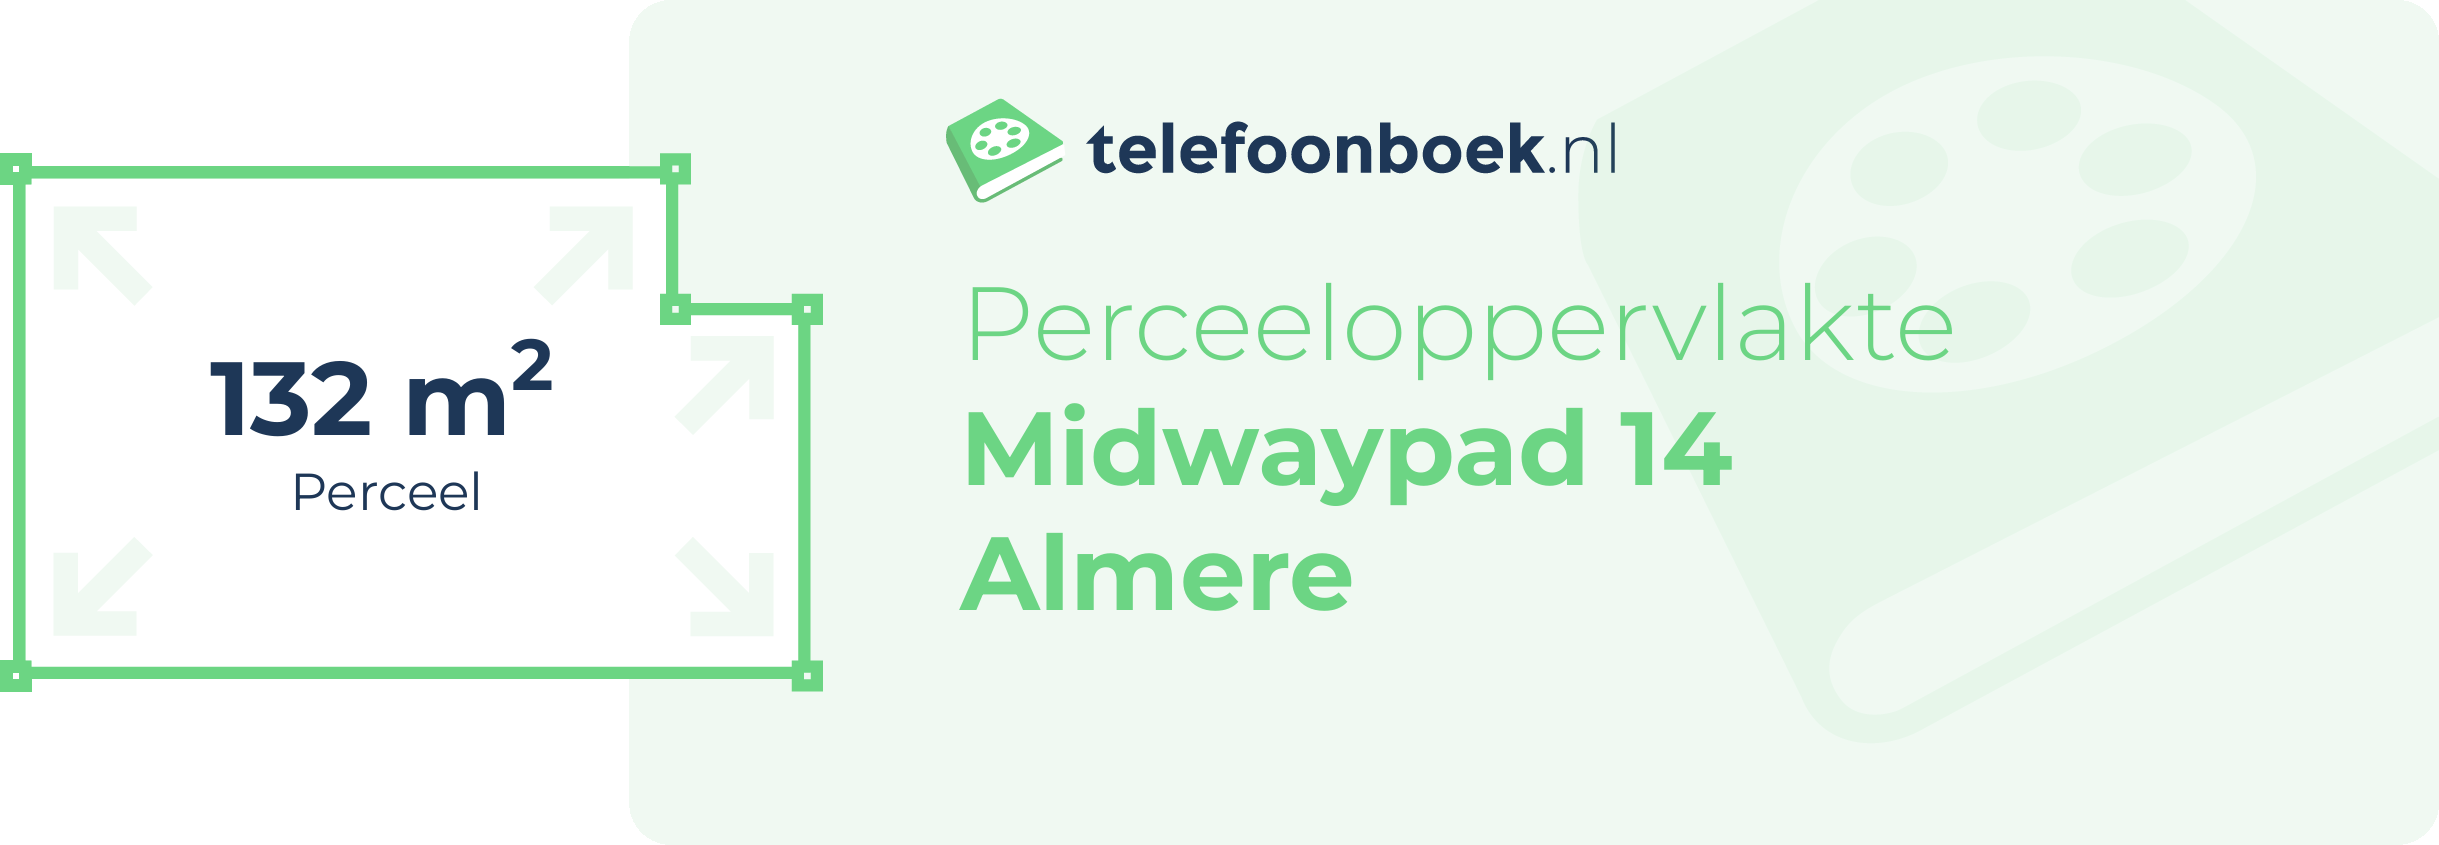 Perceeloppervlakte Midwaypad 14 Almere